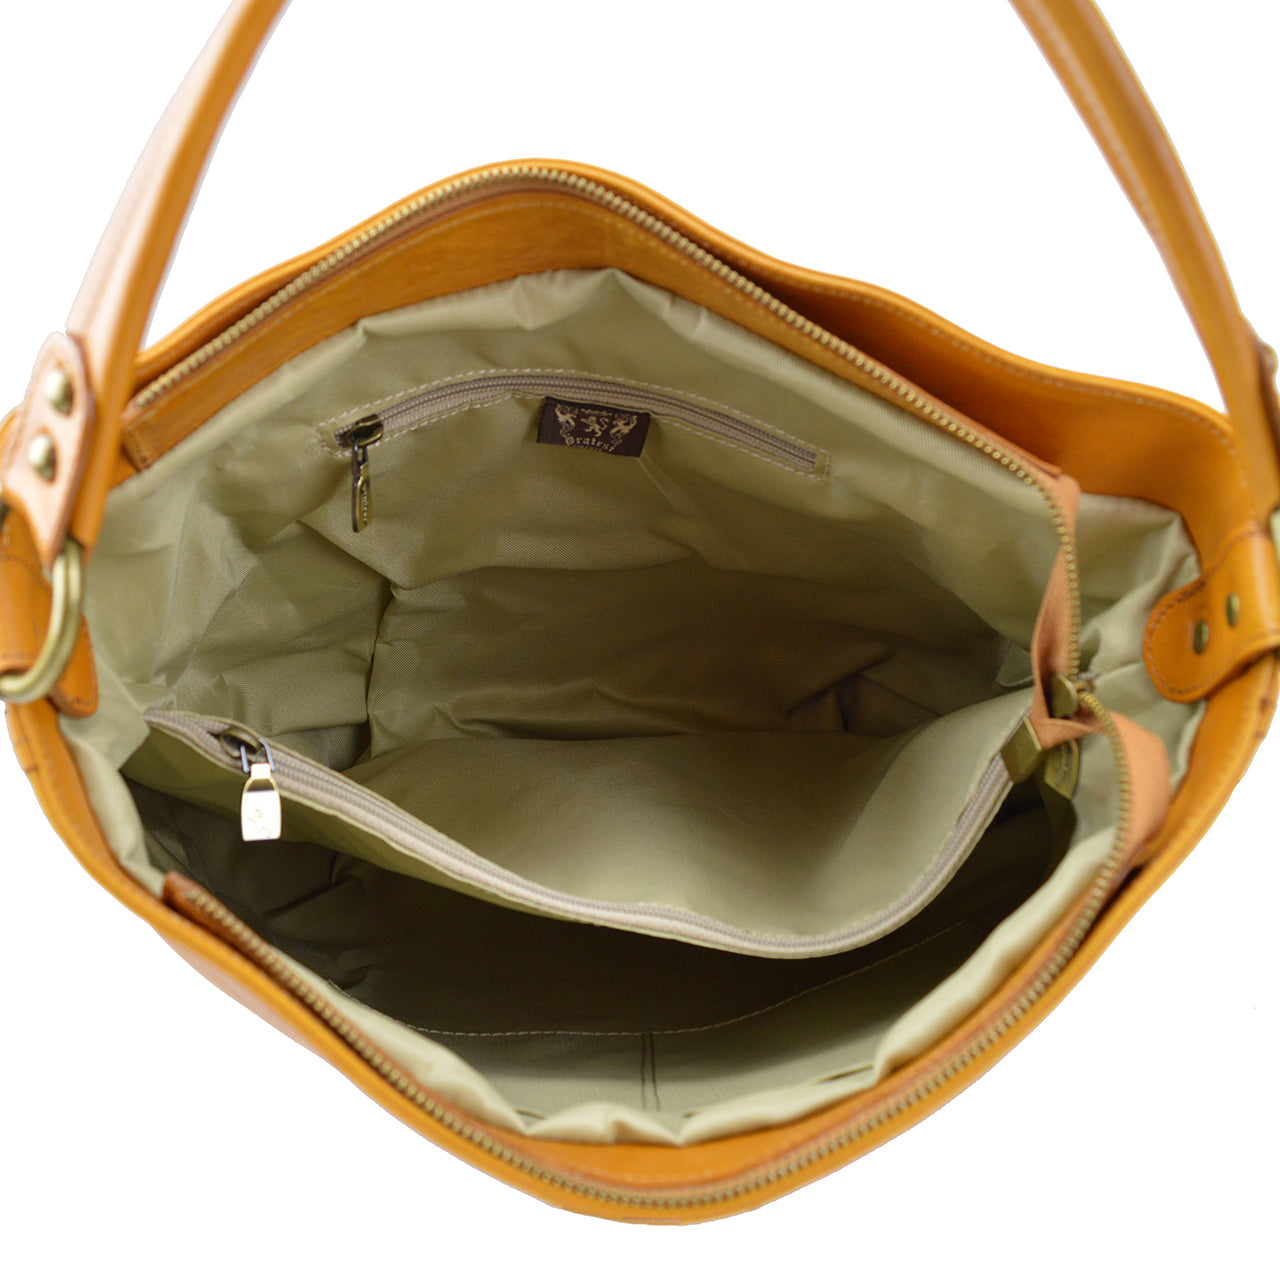 Pratesi Faella B477 Shoulder Bag in genuine Italian leather